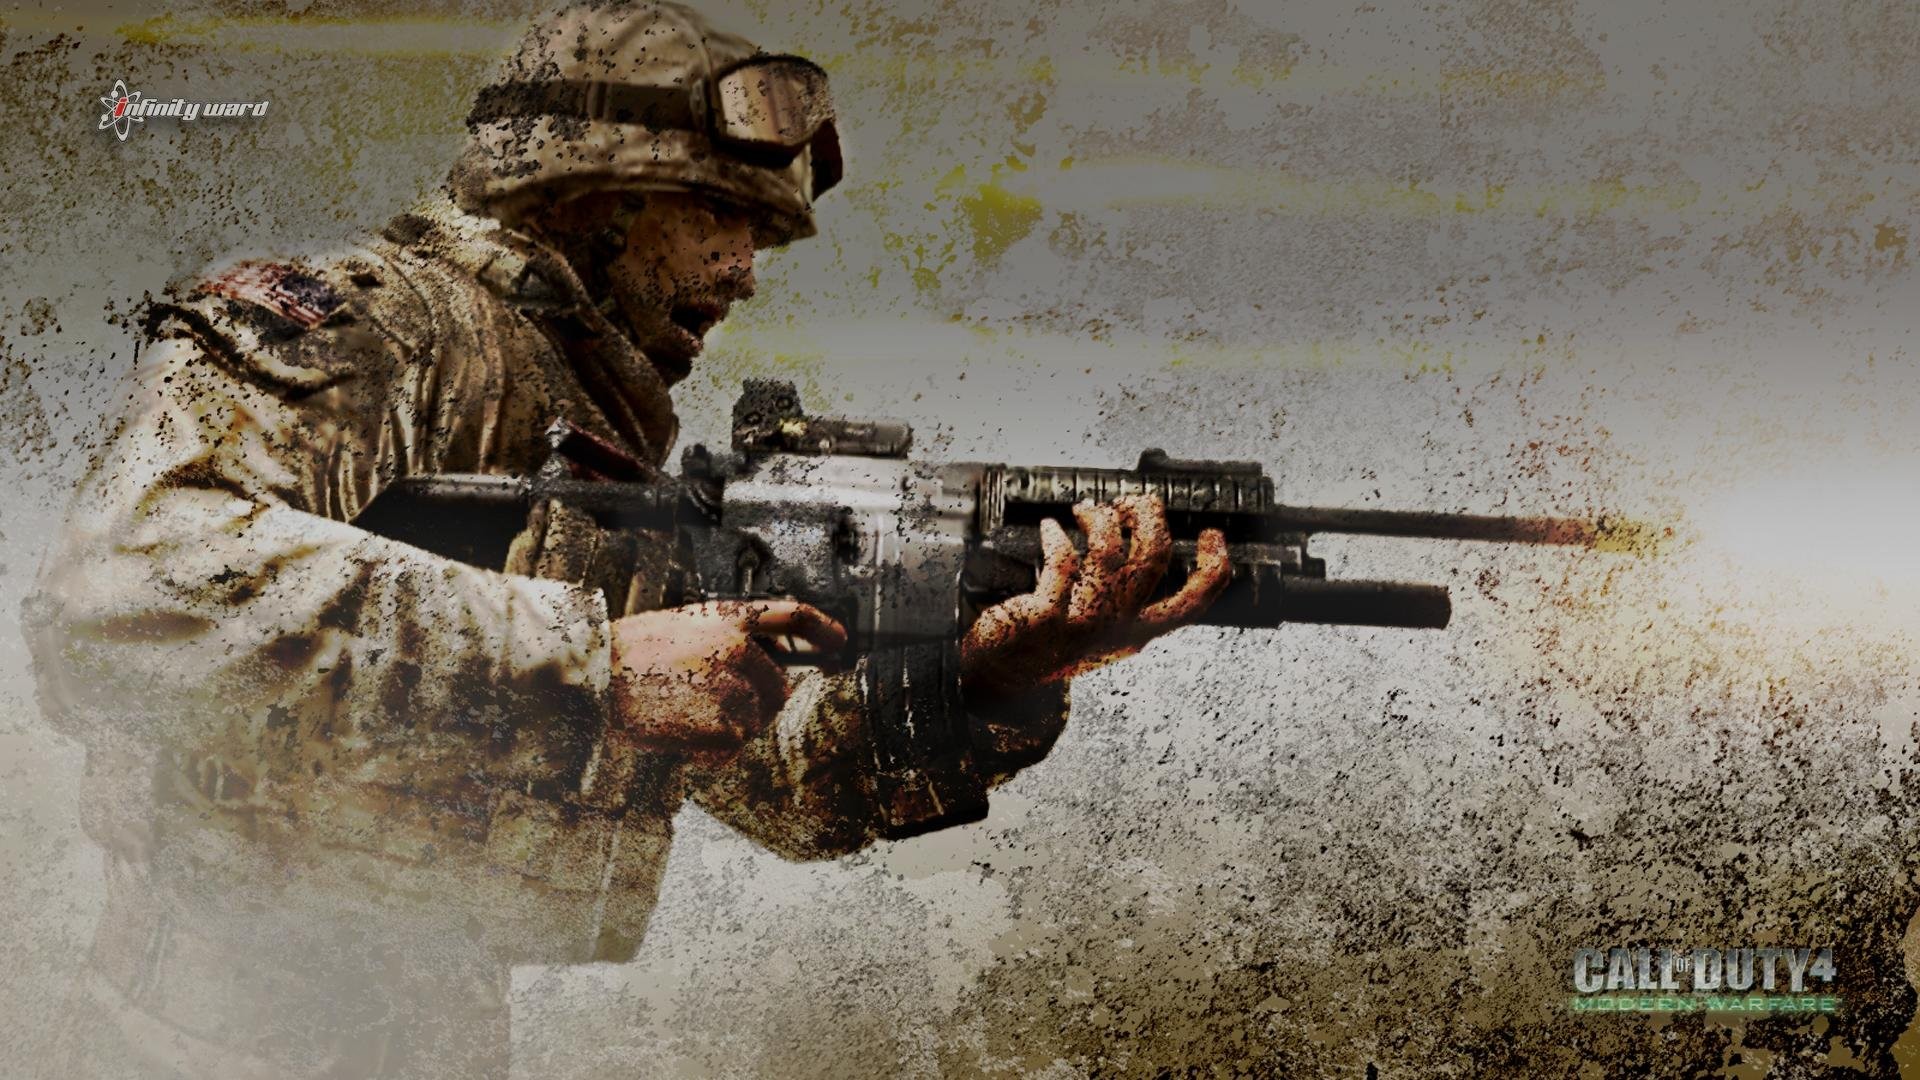 1920x1080 Call Of Duty : Modern Warfare HD Wallpapers Backgrounds Call Of Duty 4 Wallpapers  Wallpapers)